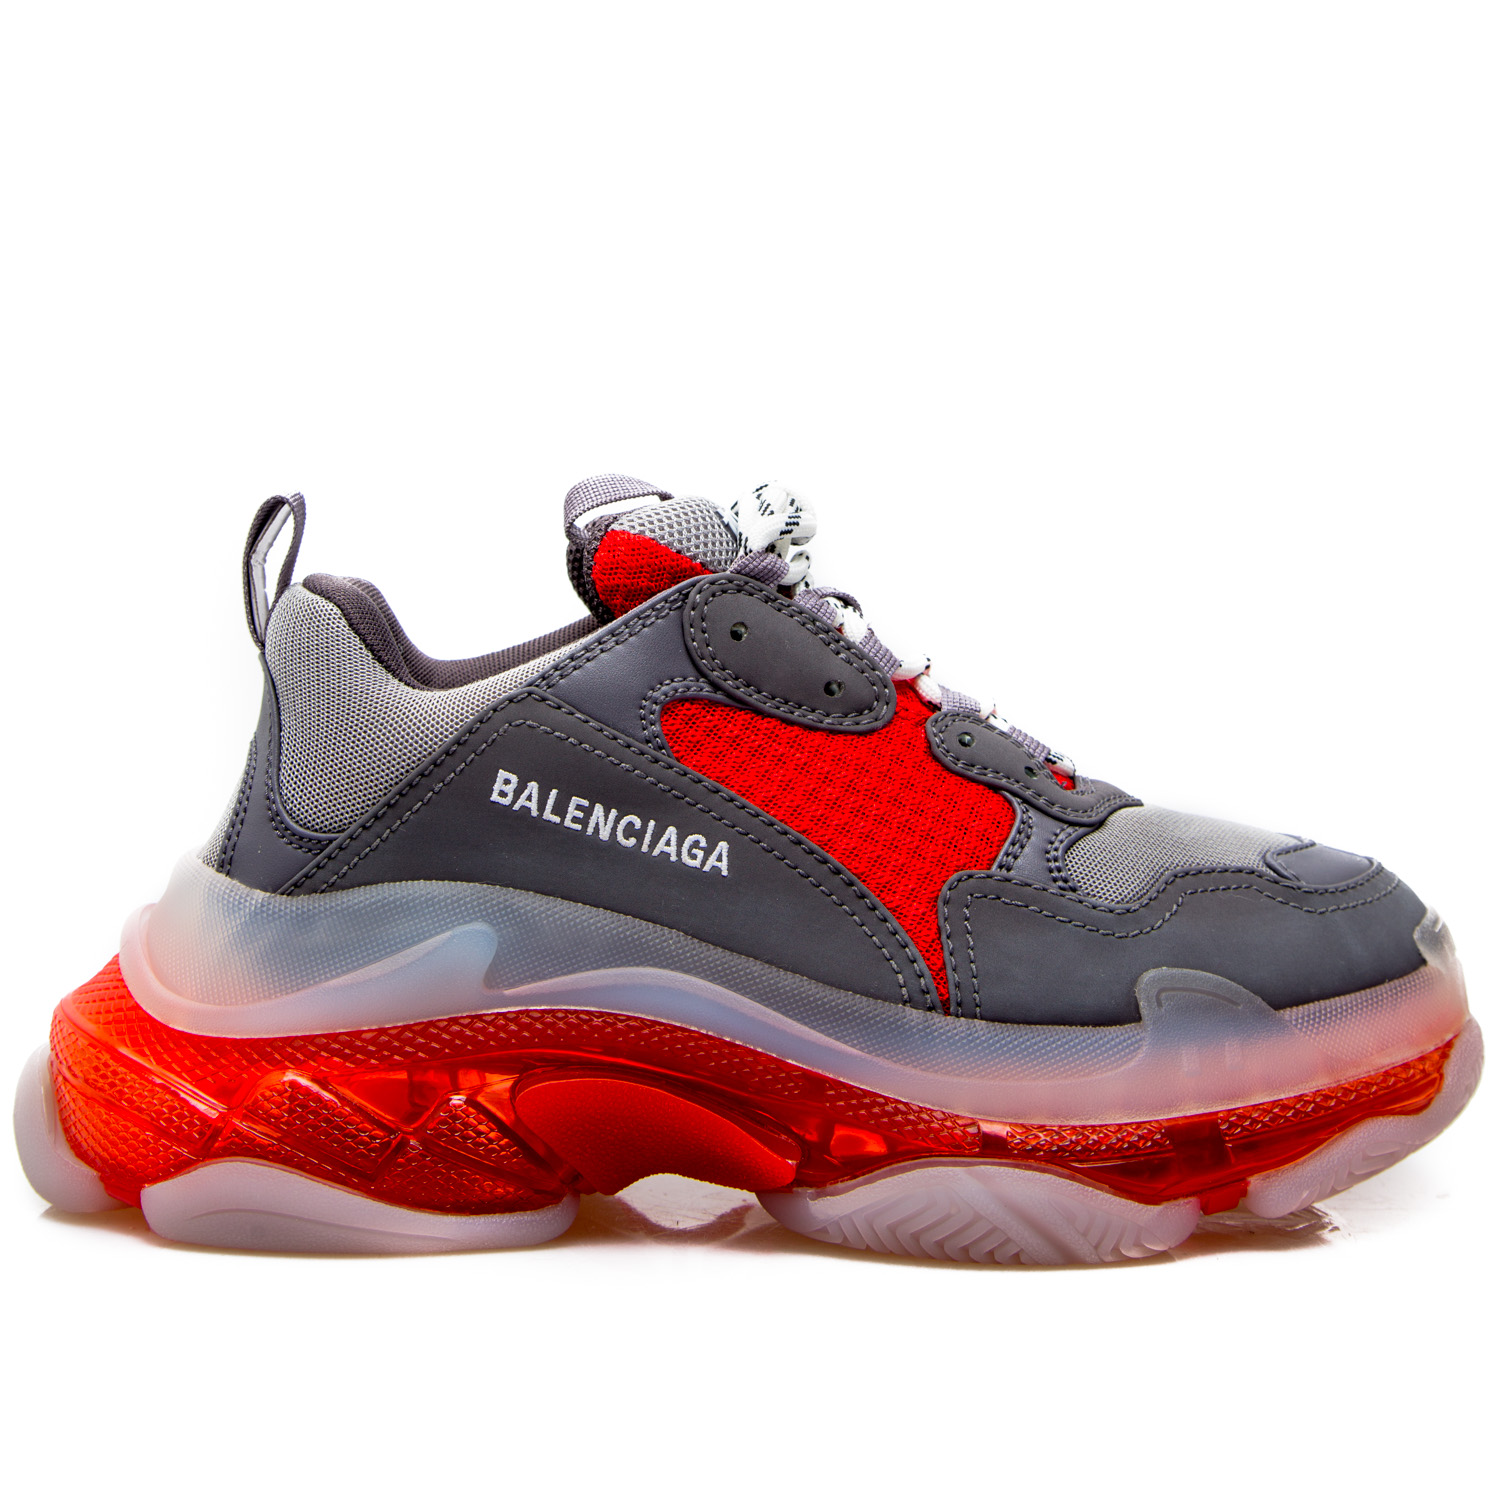 Balenciaga triple s sneaker premium quality with men and women